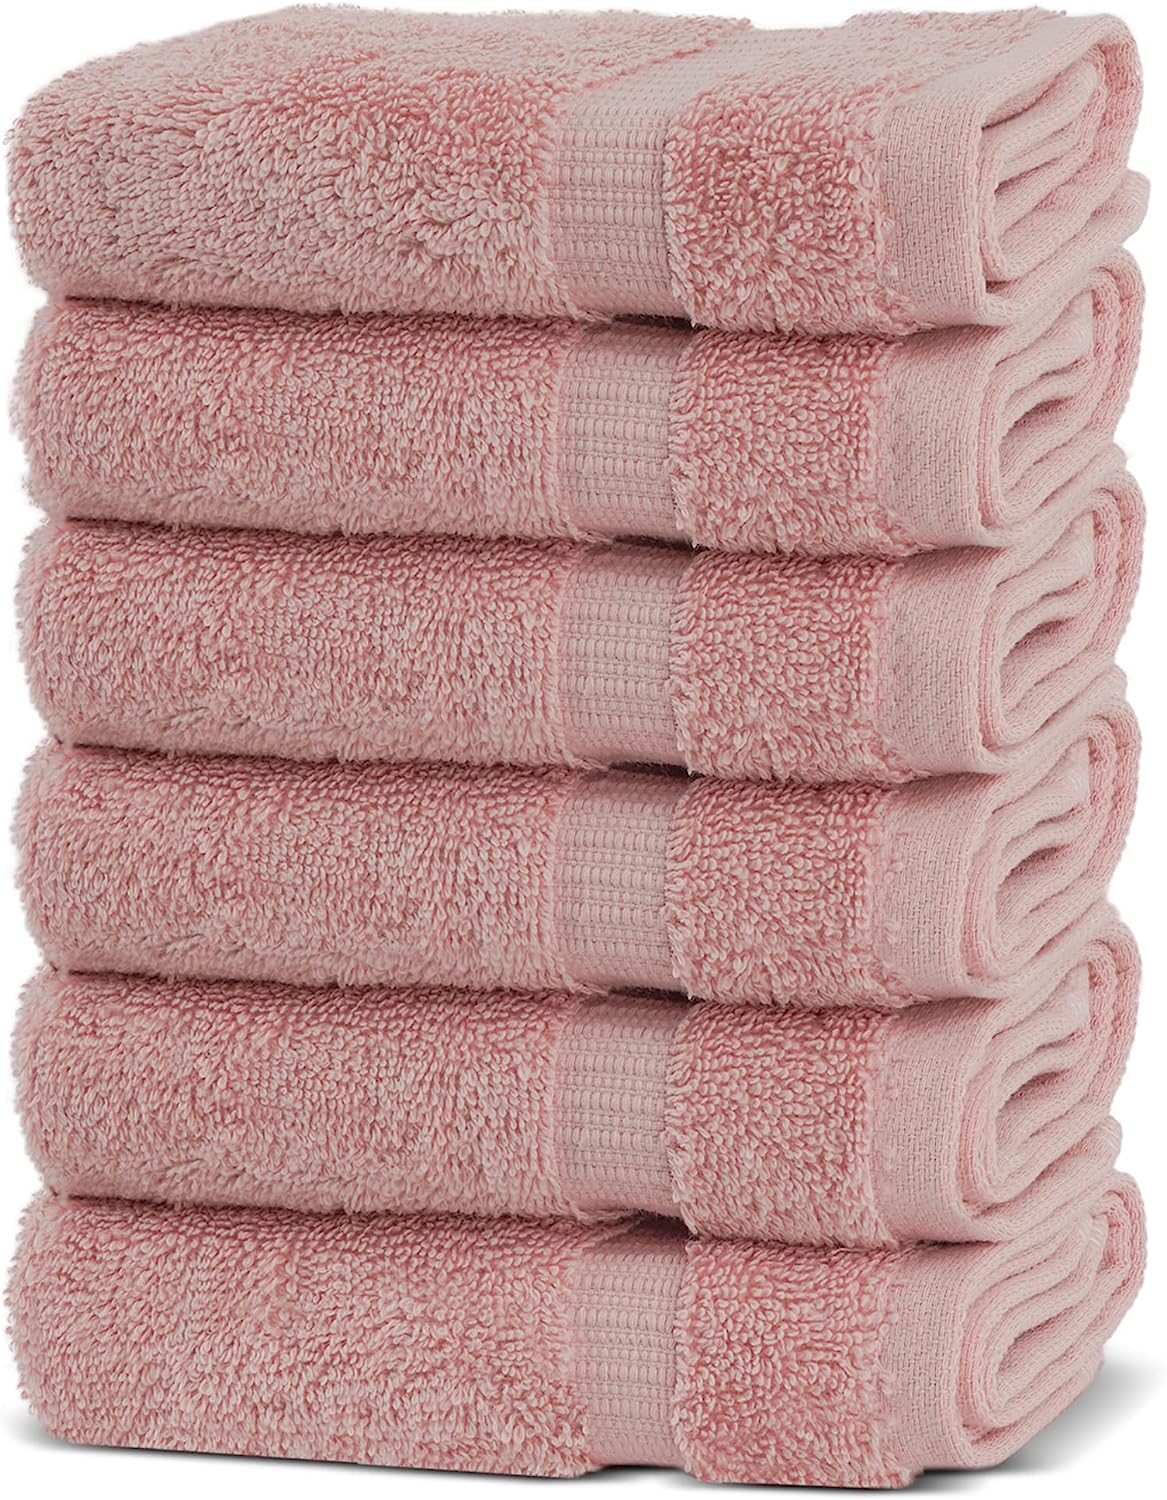 Chakir Turkish Linens, 100% Cotton Premium Quality Turkish Bath Sheets  (35''x70'' Large Bath Sheet Towels - White)